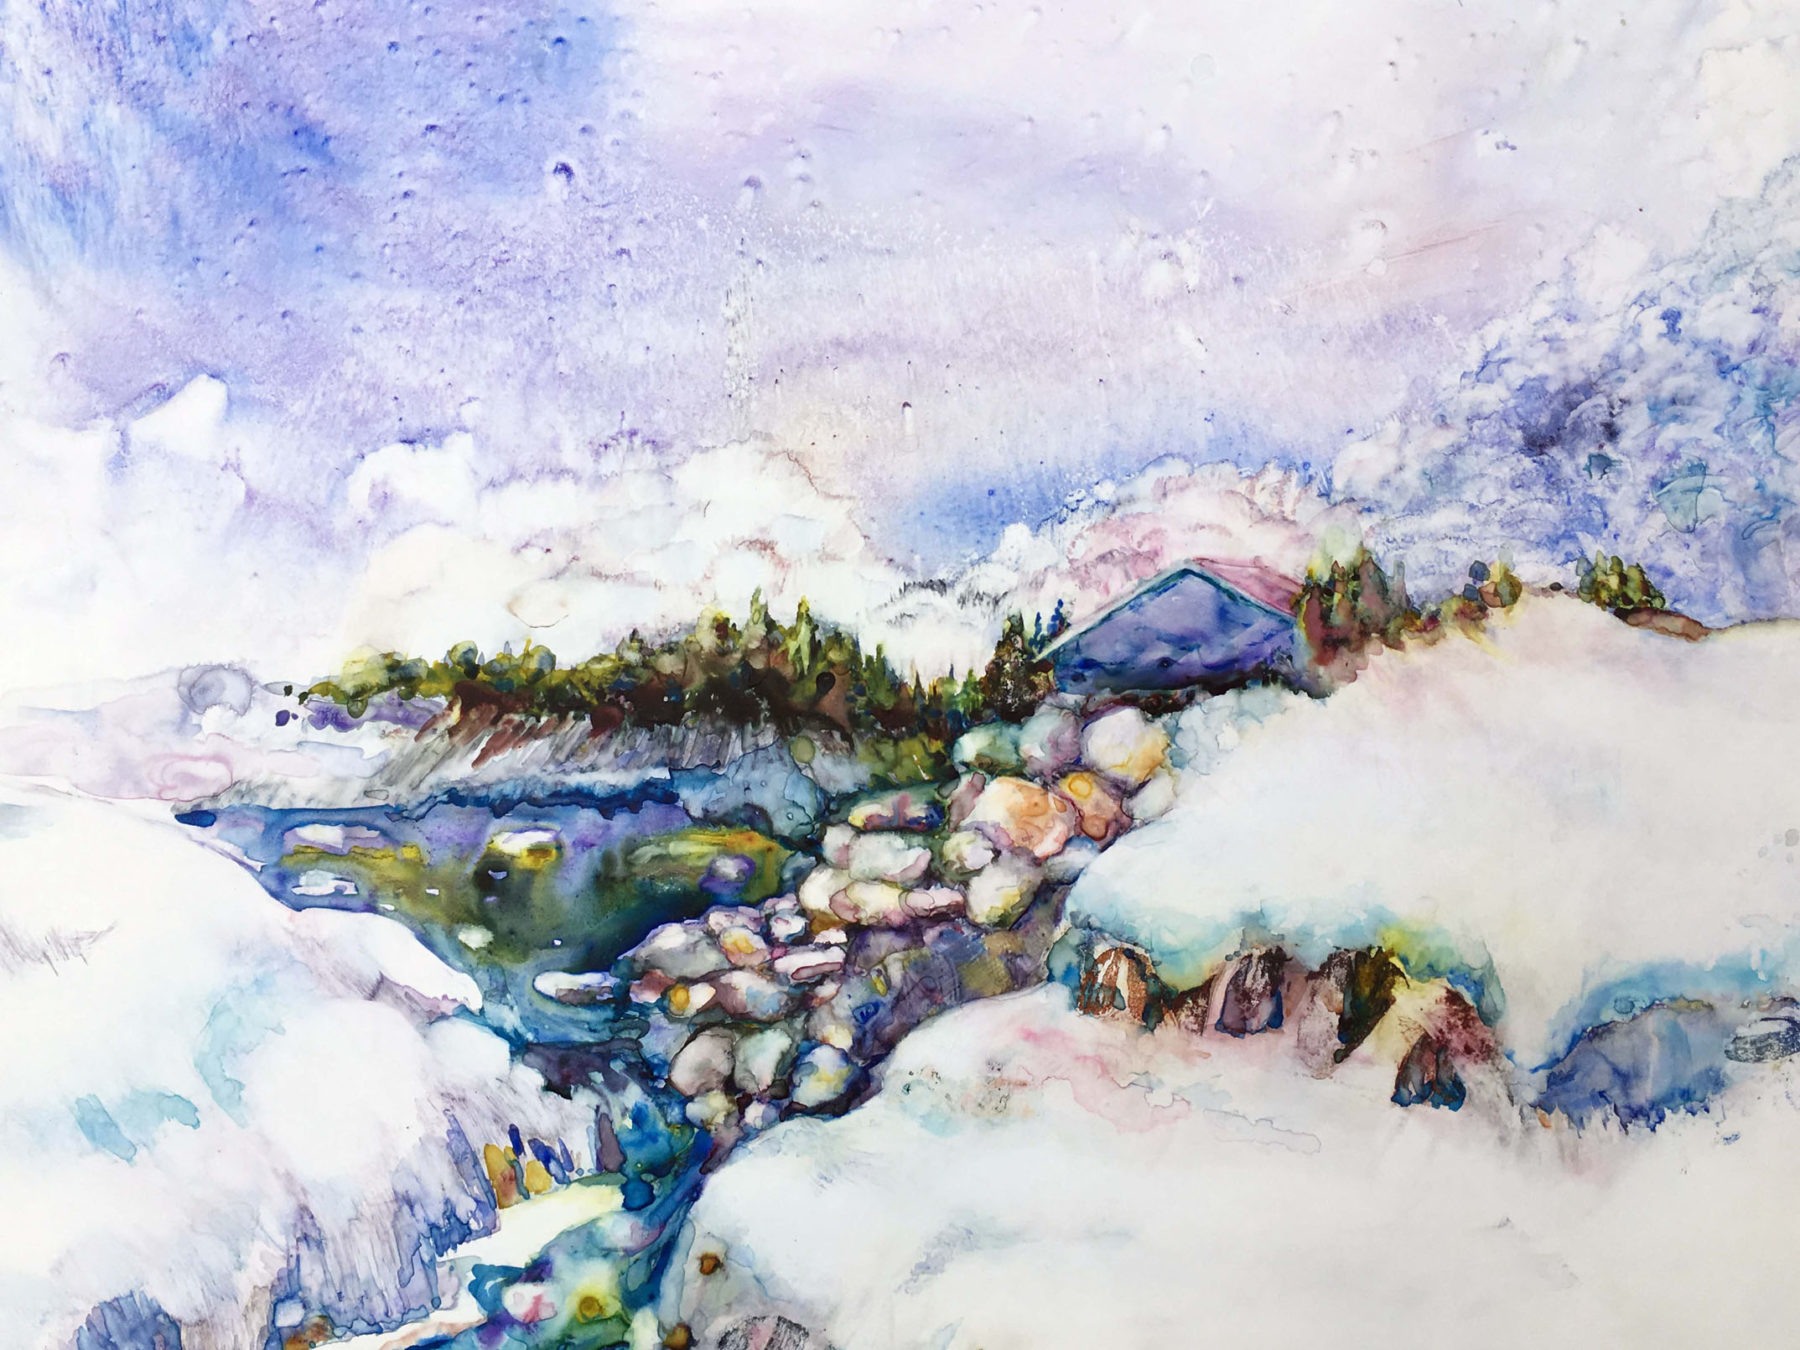 Lois Westerfield, Winter Sky, watercolor on Yupo, 16 x 20